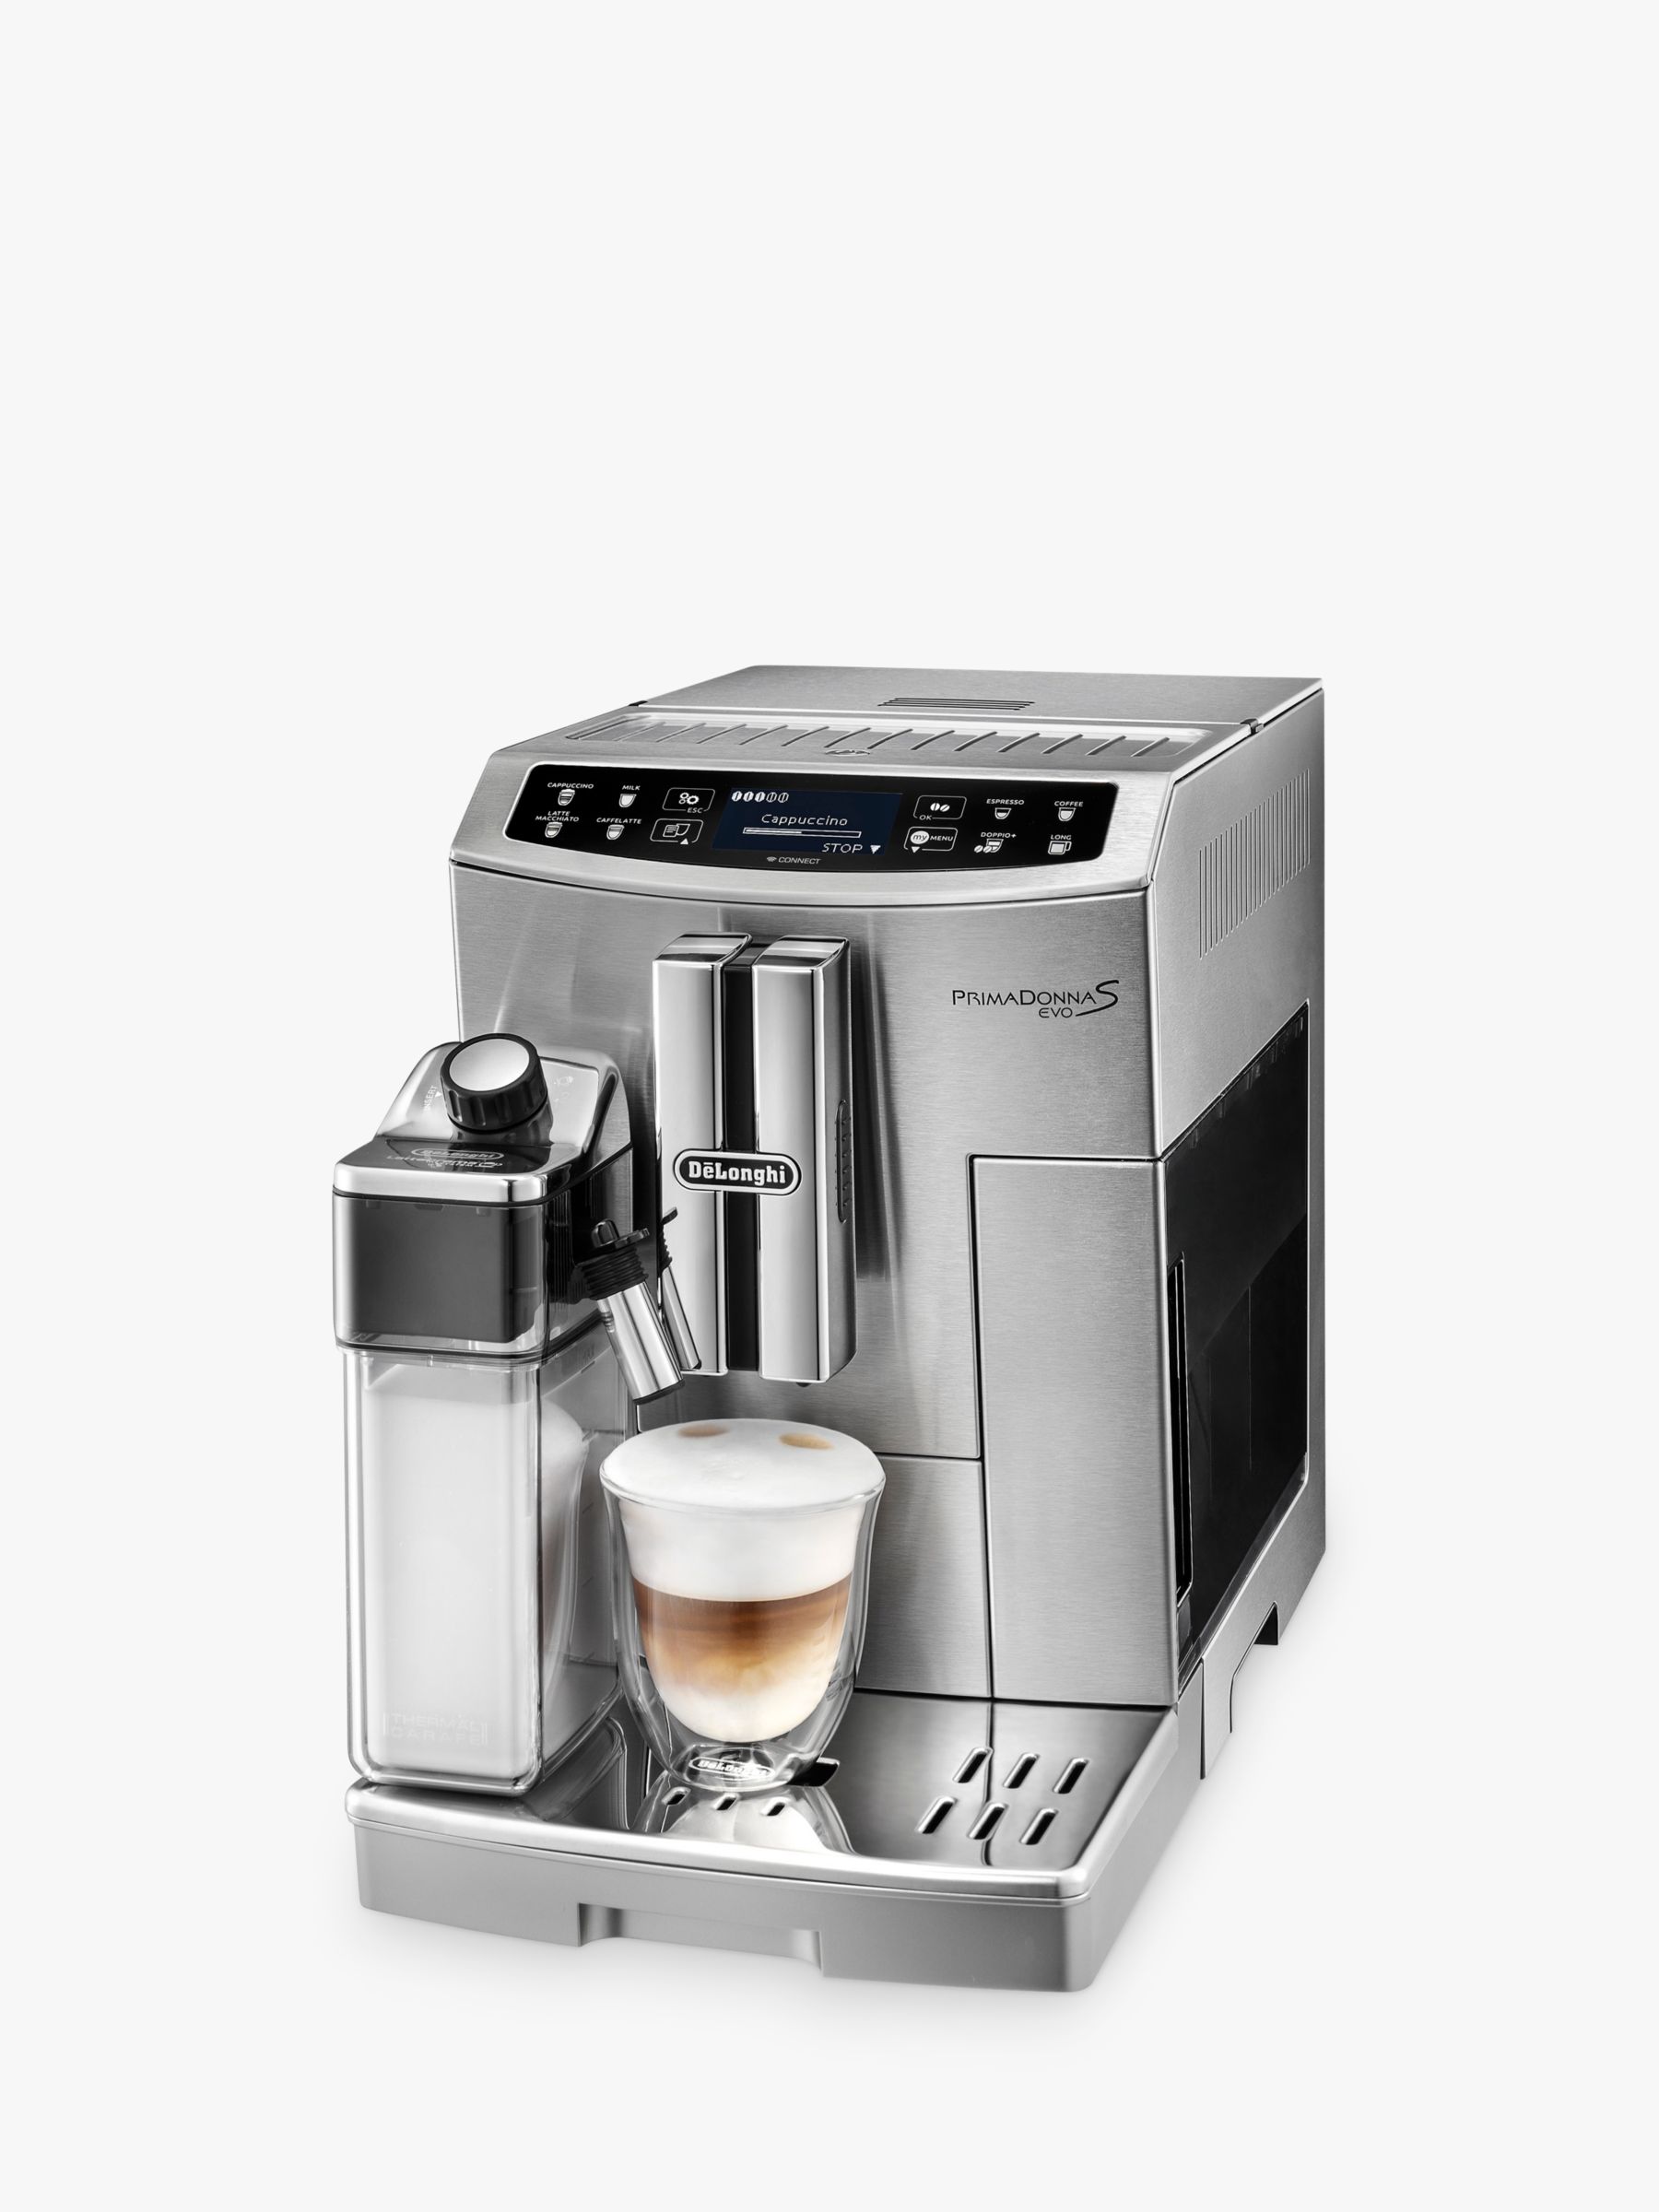 De’Longhi ECAM 510.55 PrimaDonna S Evo Bean-to-Cup Coffee Machine, Silver